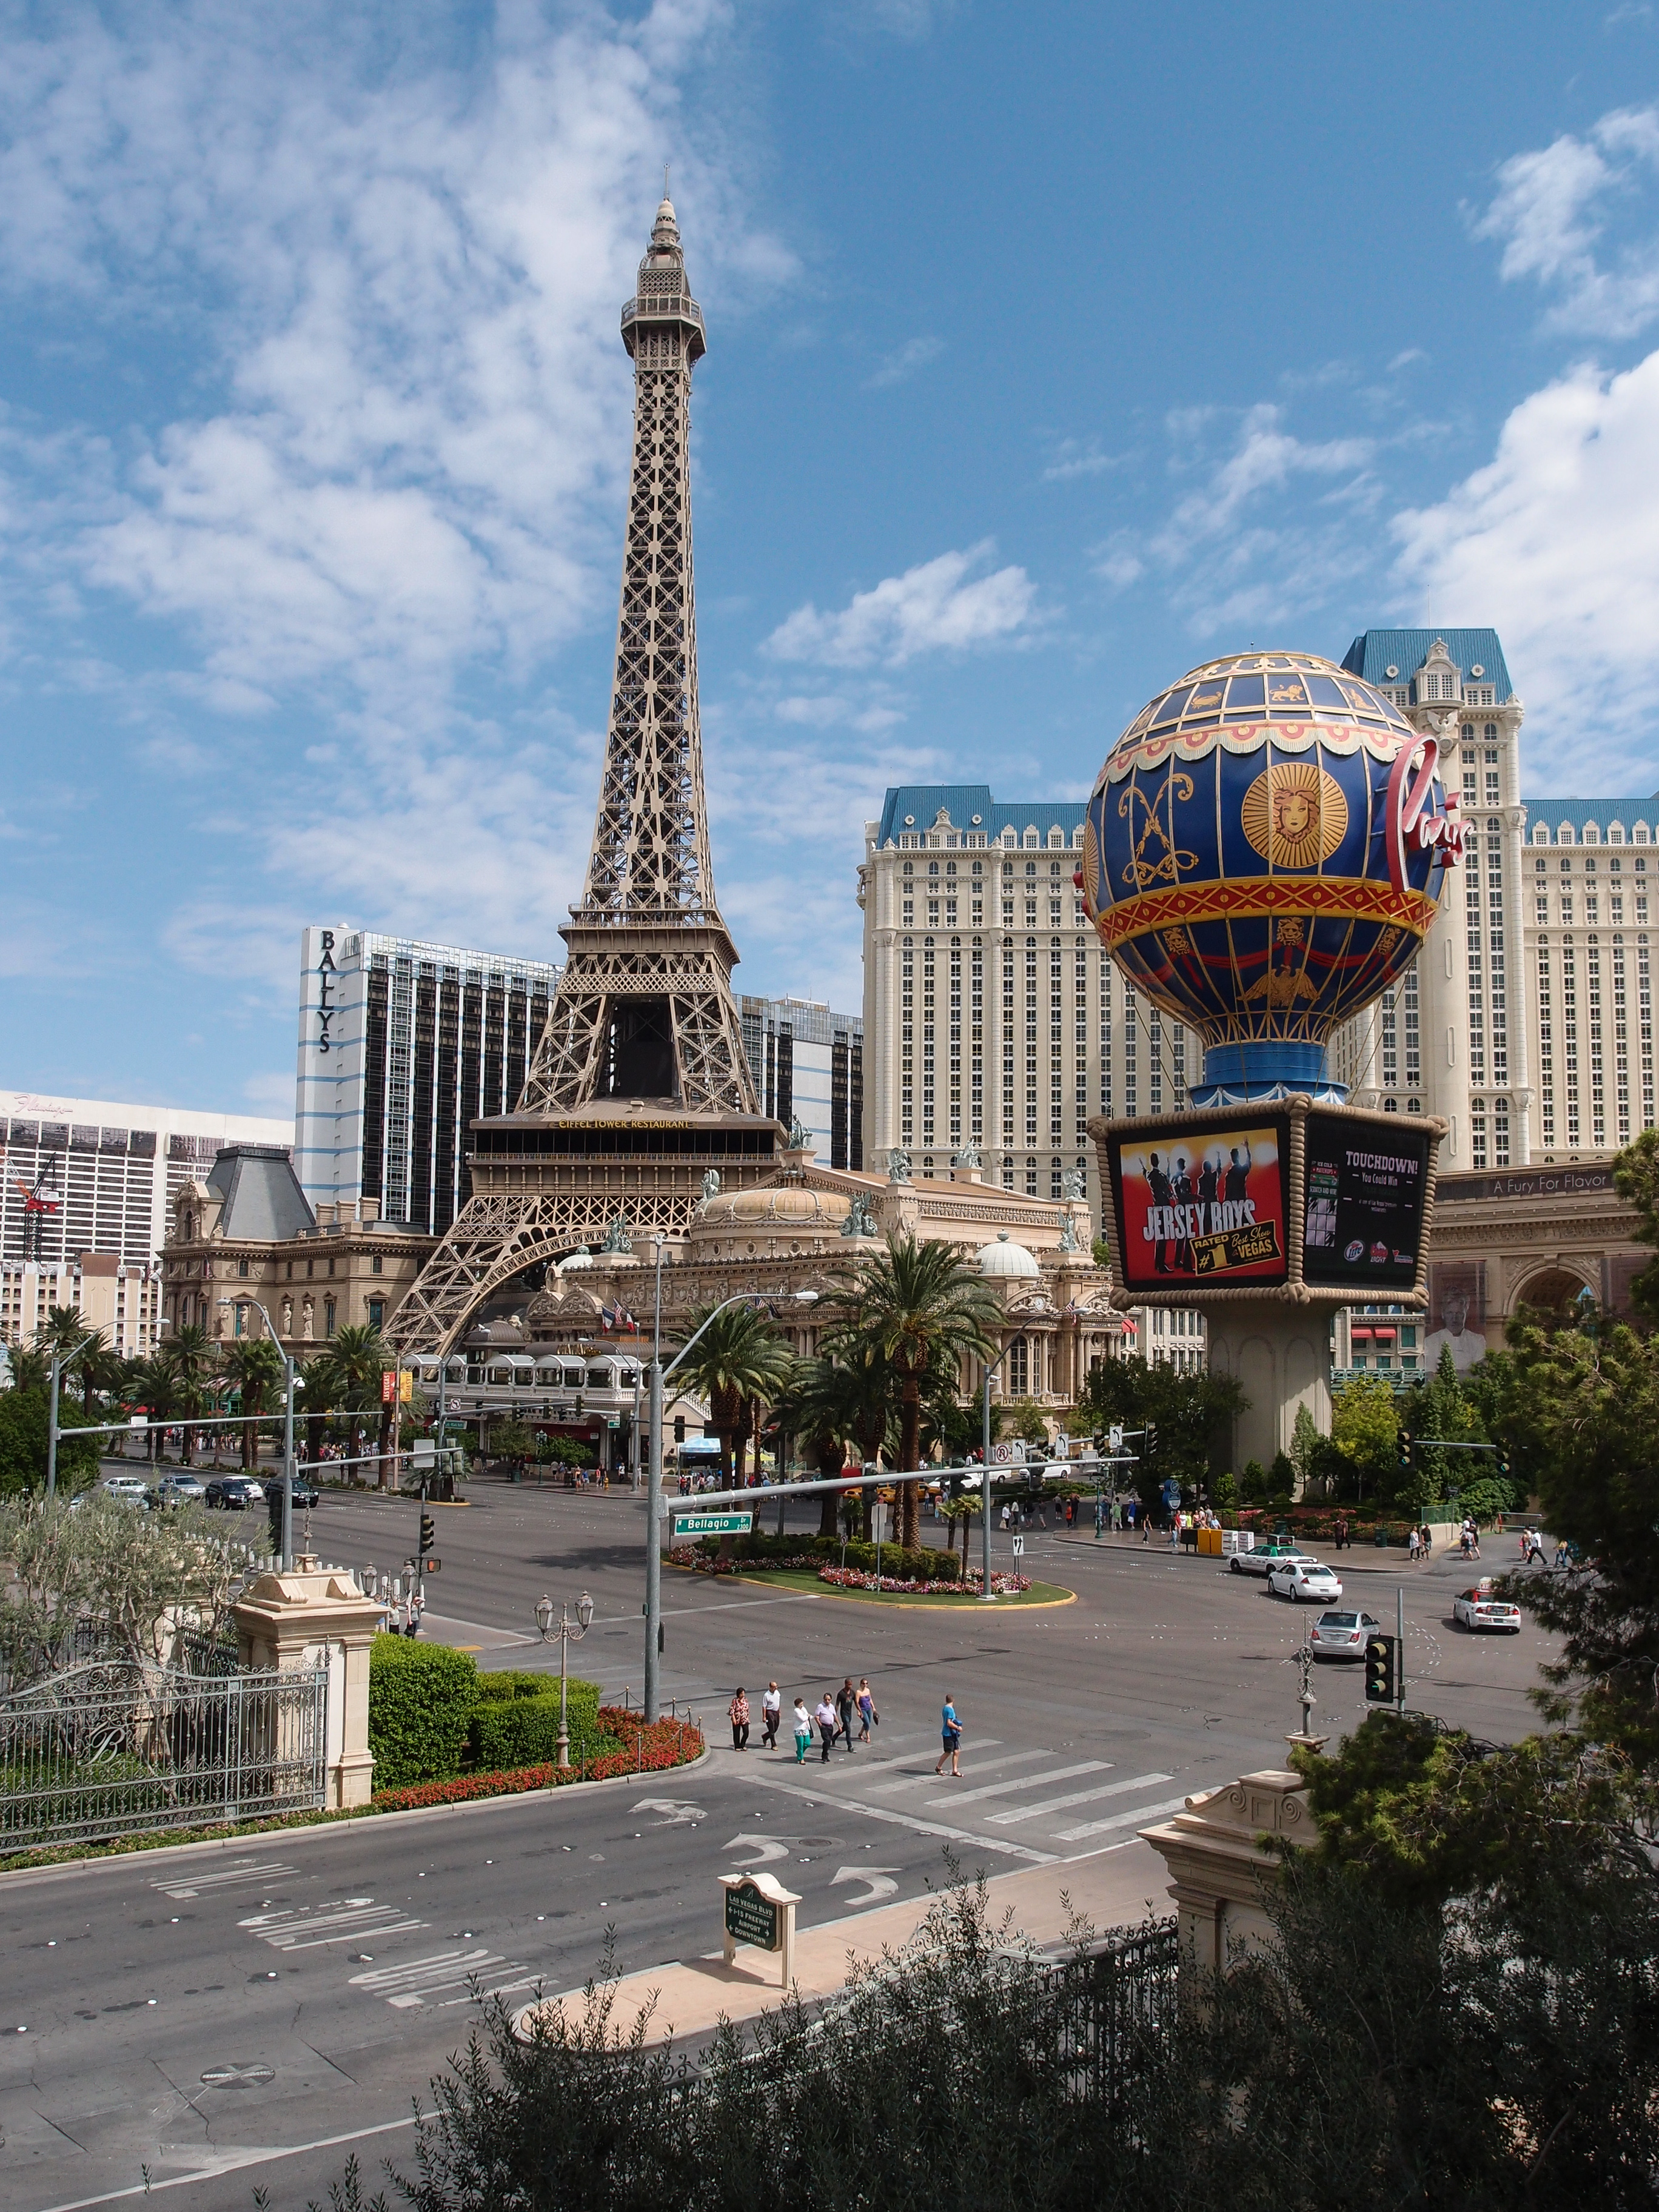 File:Las-Vegas-Paris-Hotel-Eiffel-Tower-8307.jpg - Wikimedia Commons